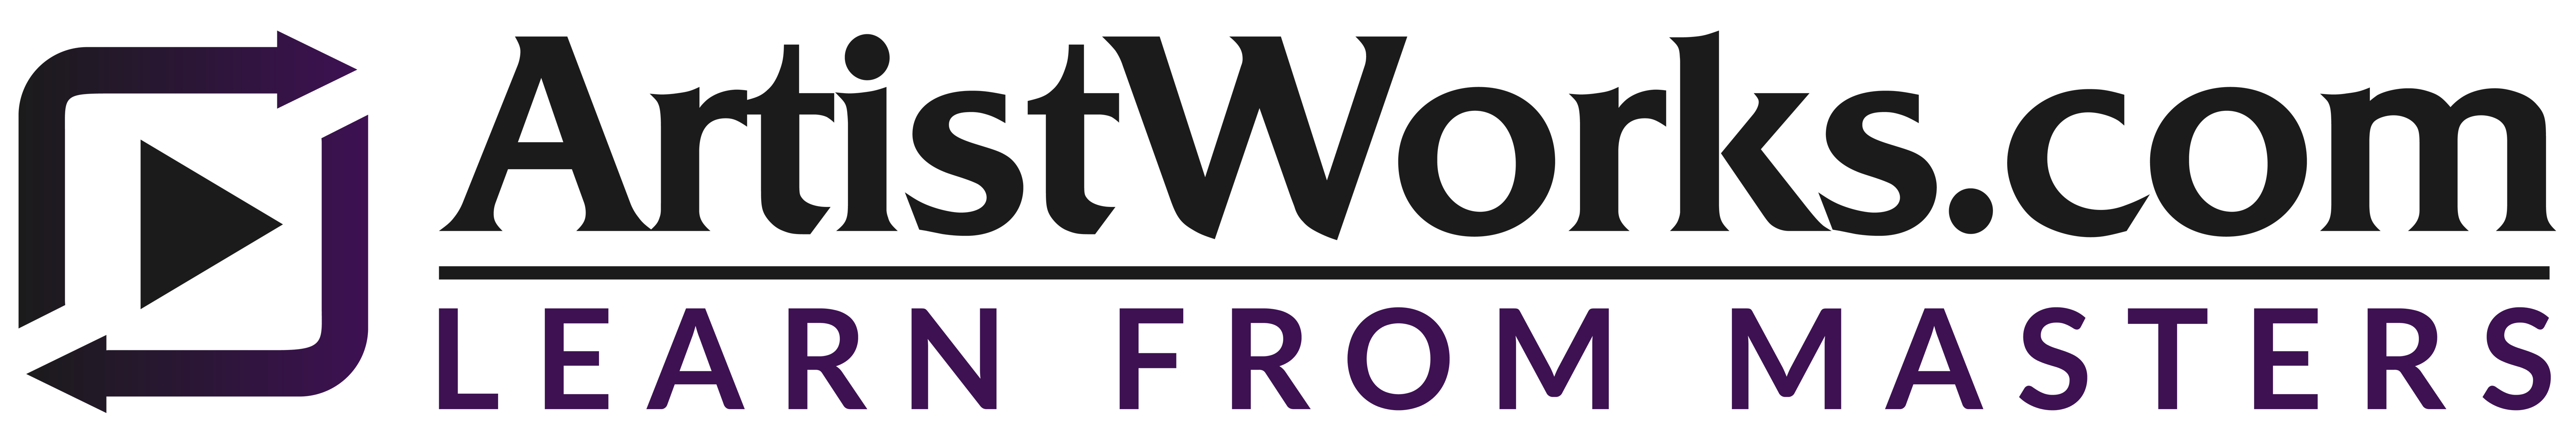 AW_WM_and_Logo_Purple_HiRes_Transparent 2